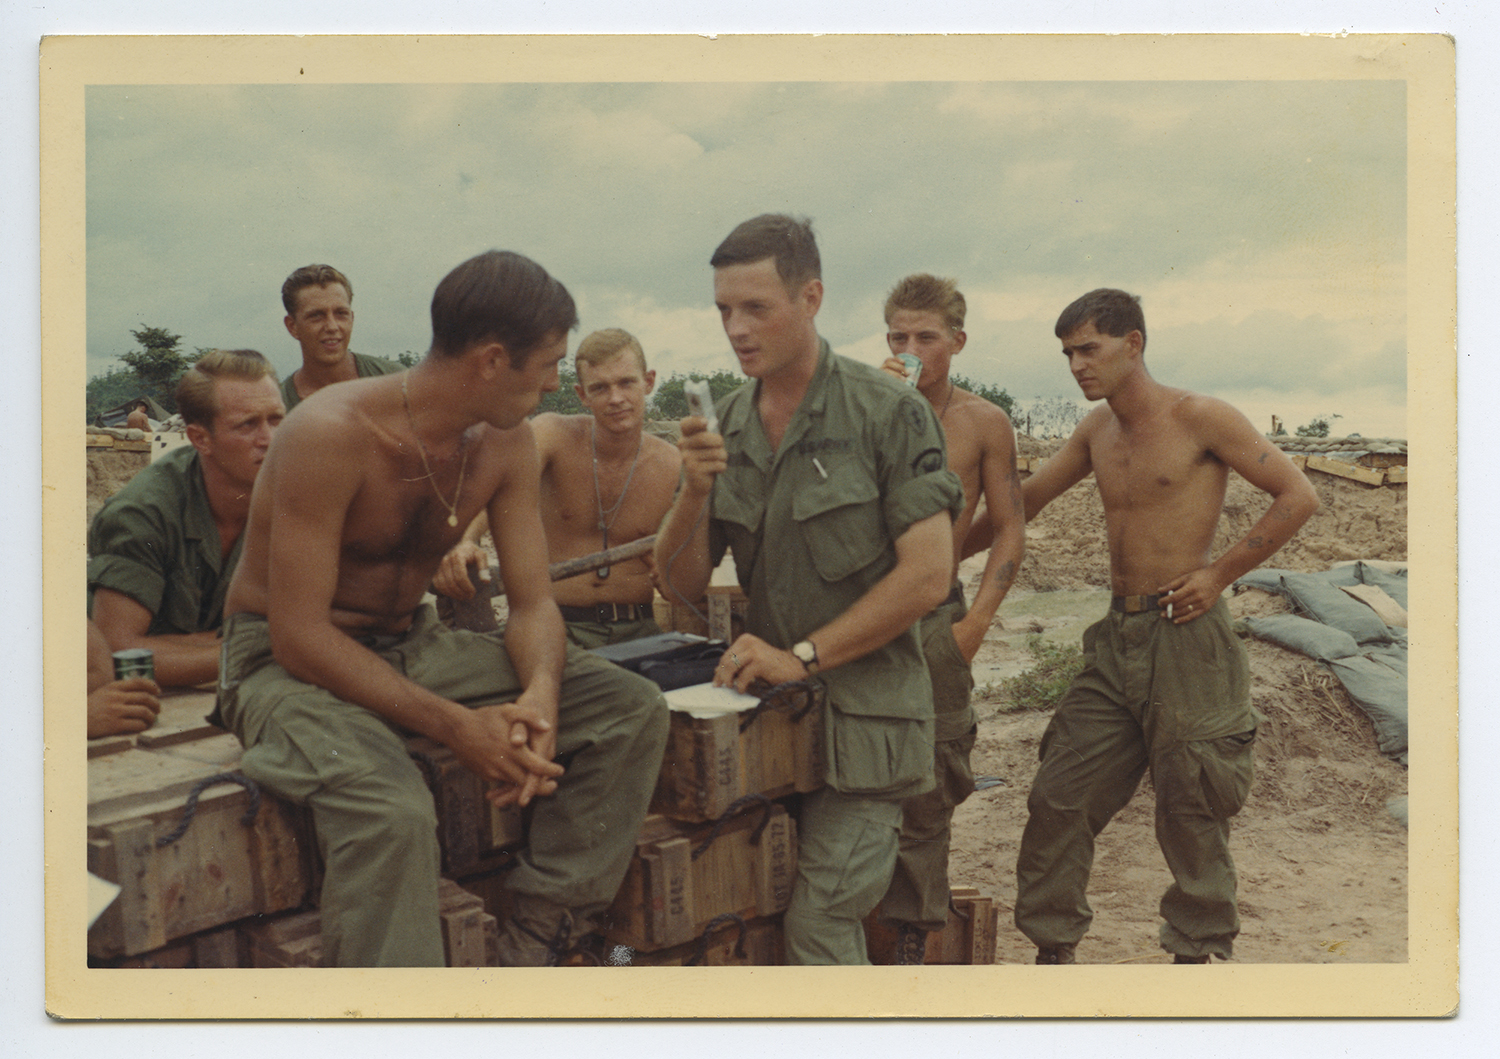 William A. Korber interviewing soldiers in Vietnam.